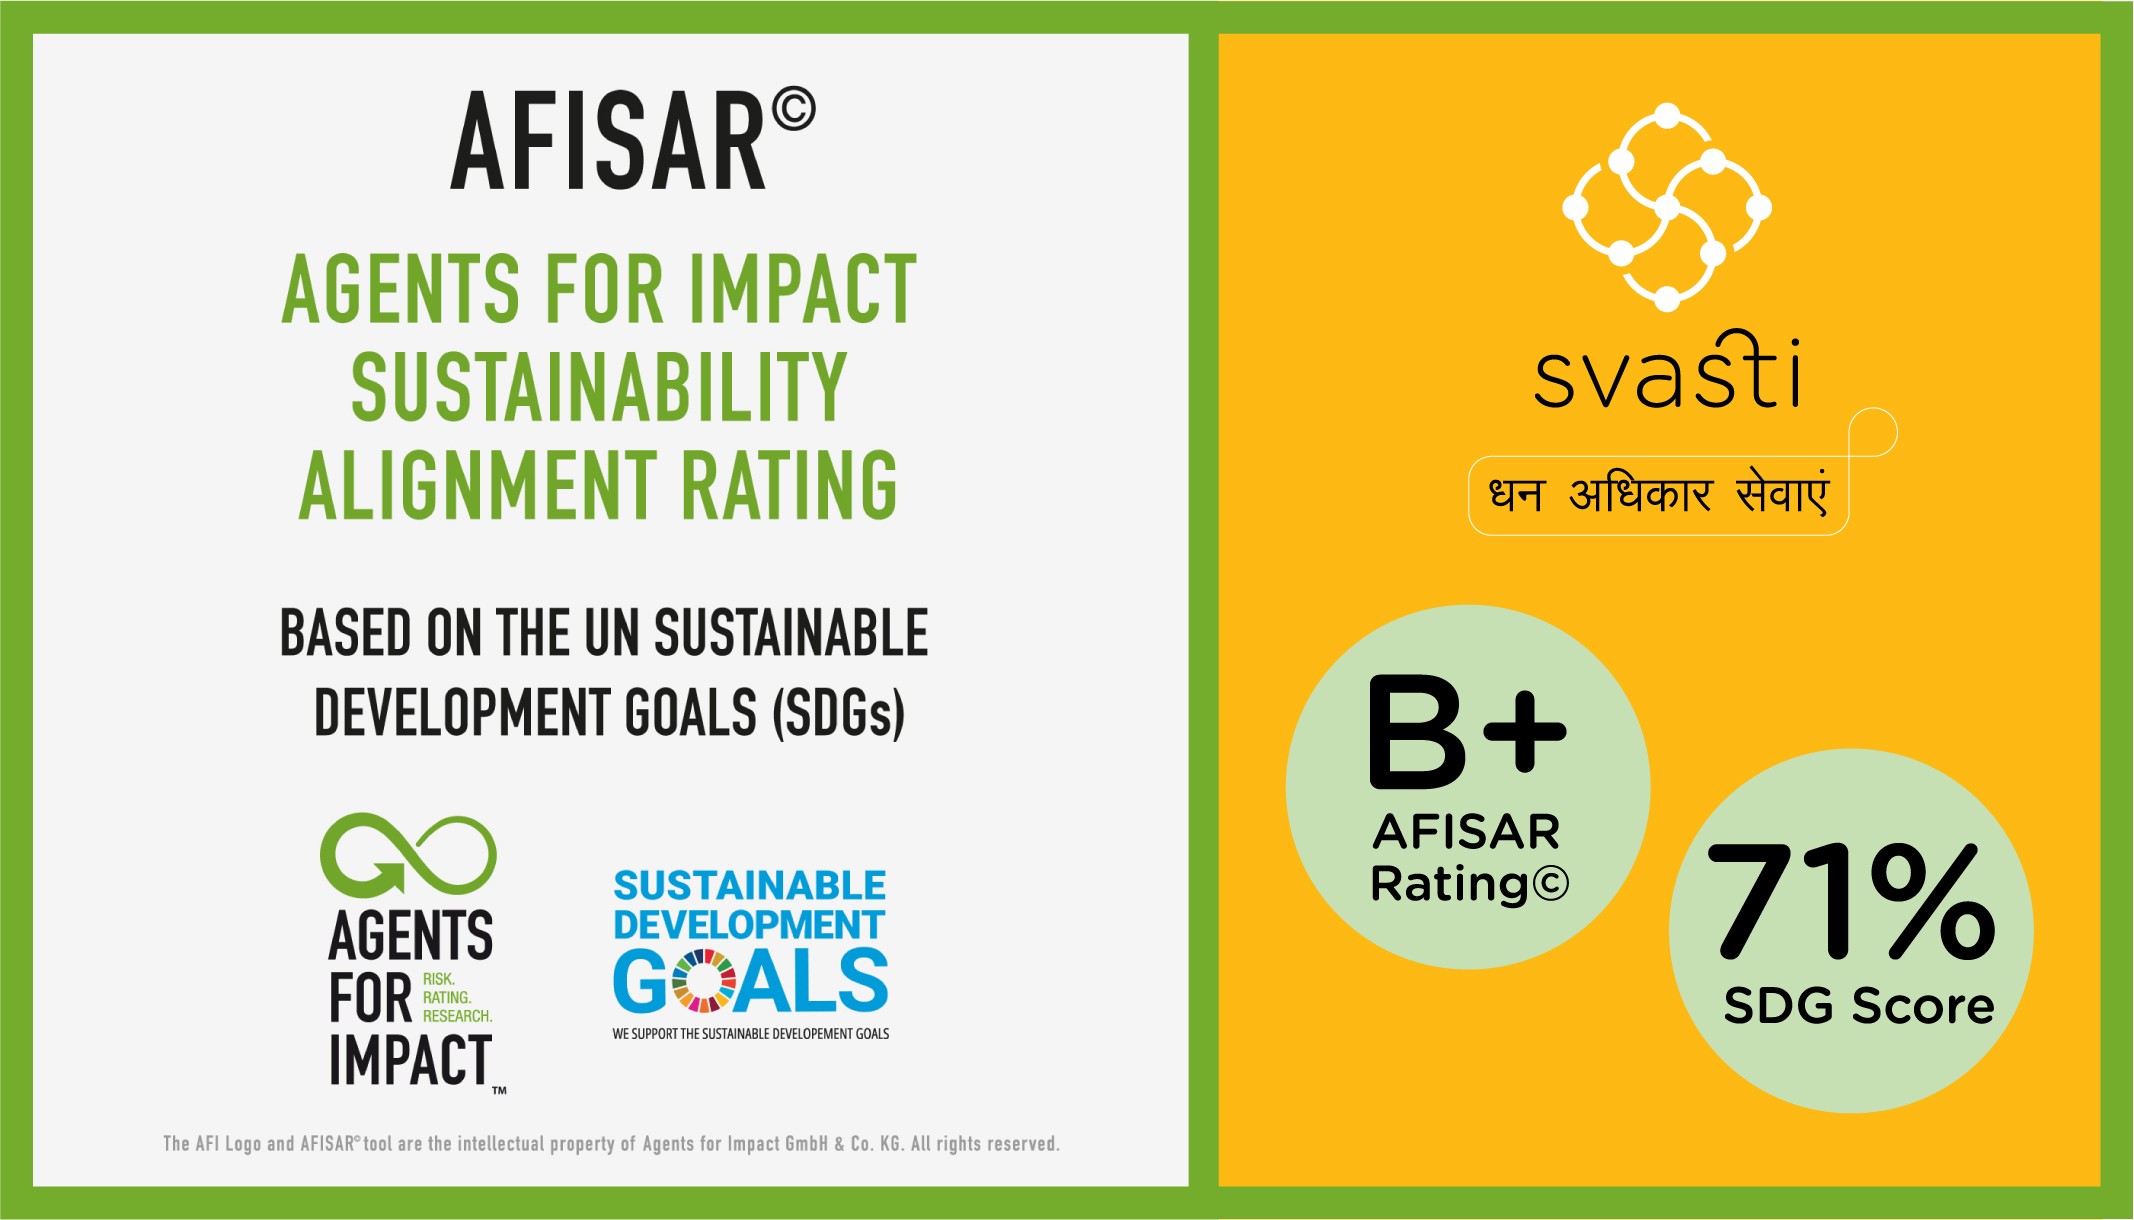 Svasti Microfinance AFISAR SDG Rating Good